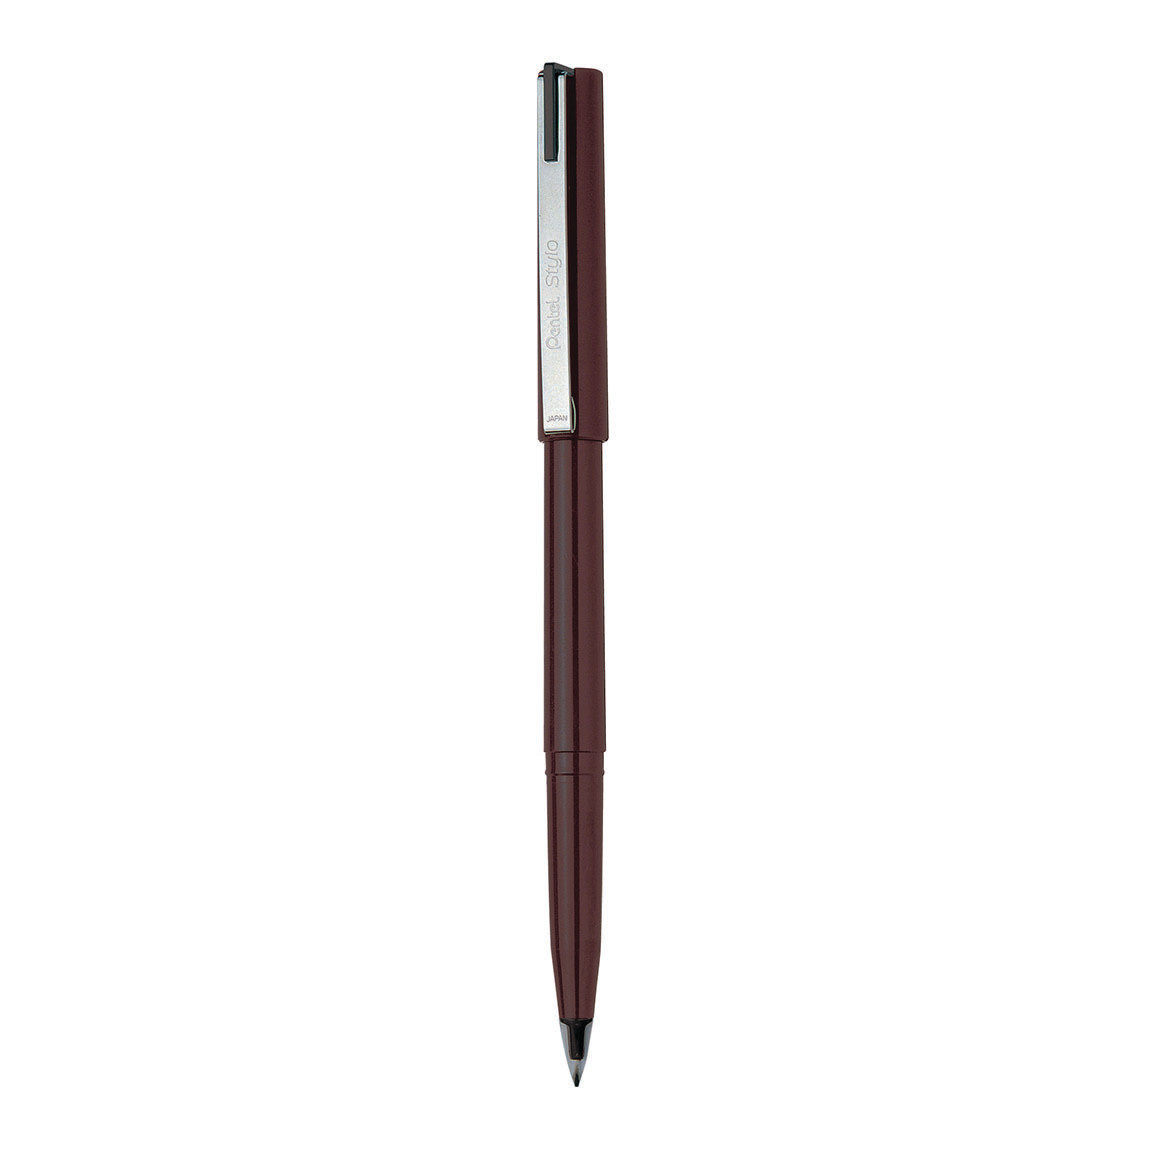  Pentel Arts Stylo Sketch Pen, Black Ink, 1 Pack (JM20BPAE) :  Calligraphy Pens : Office Products